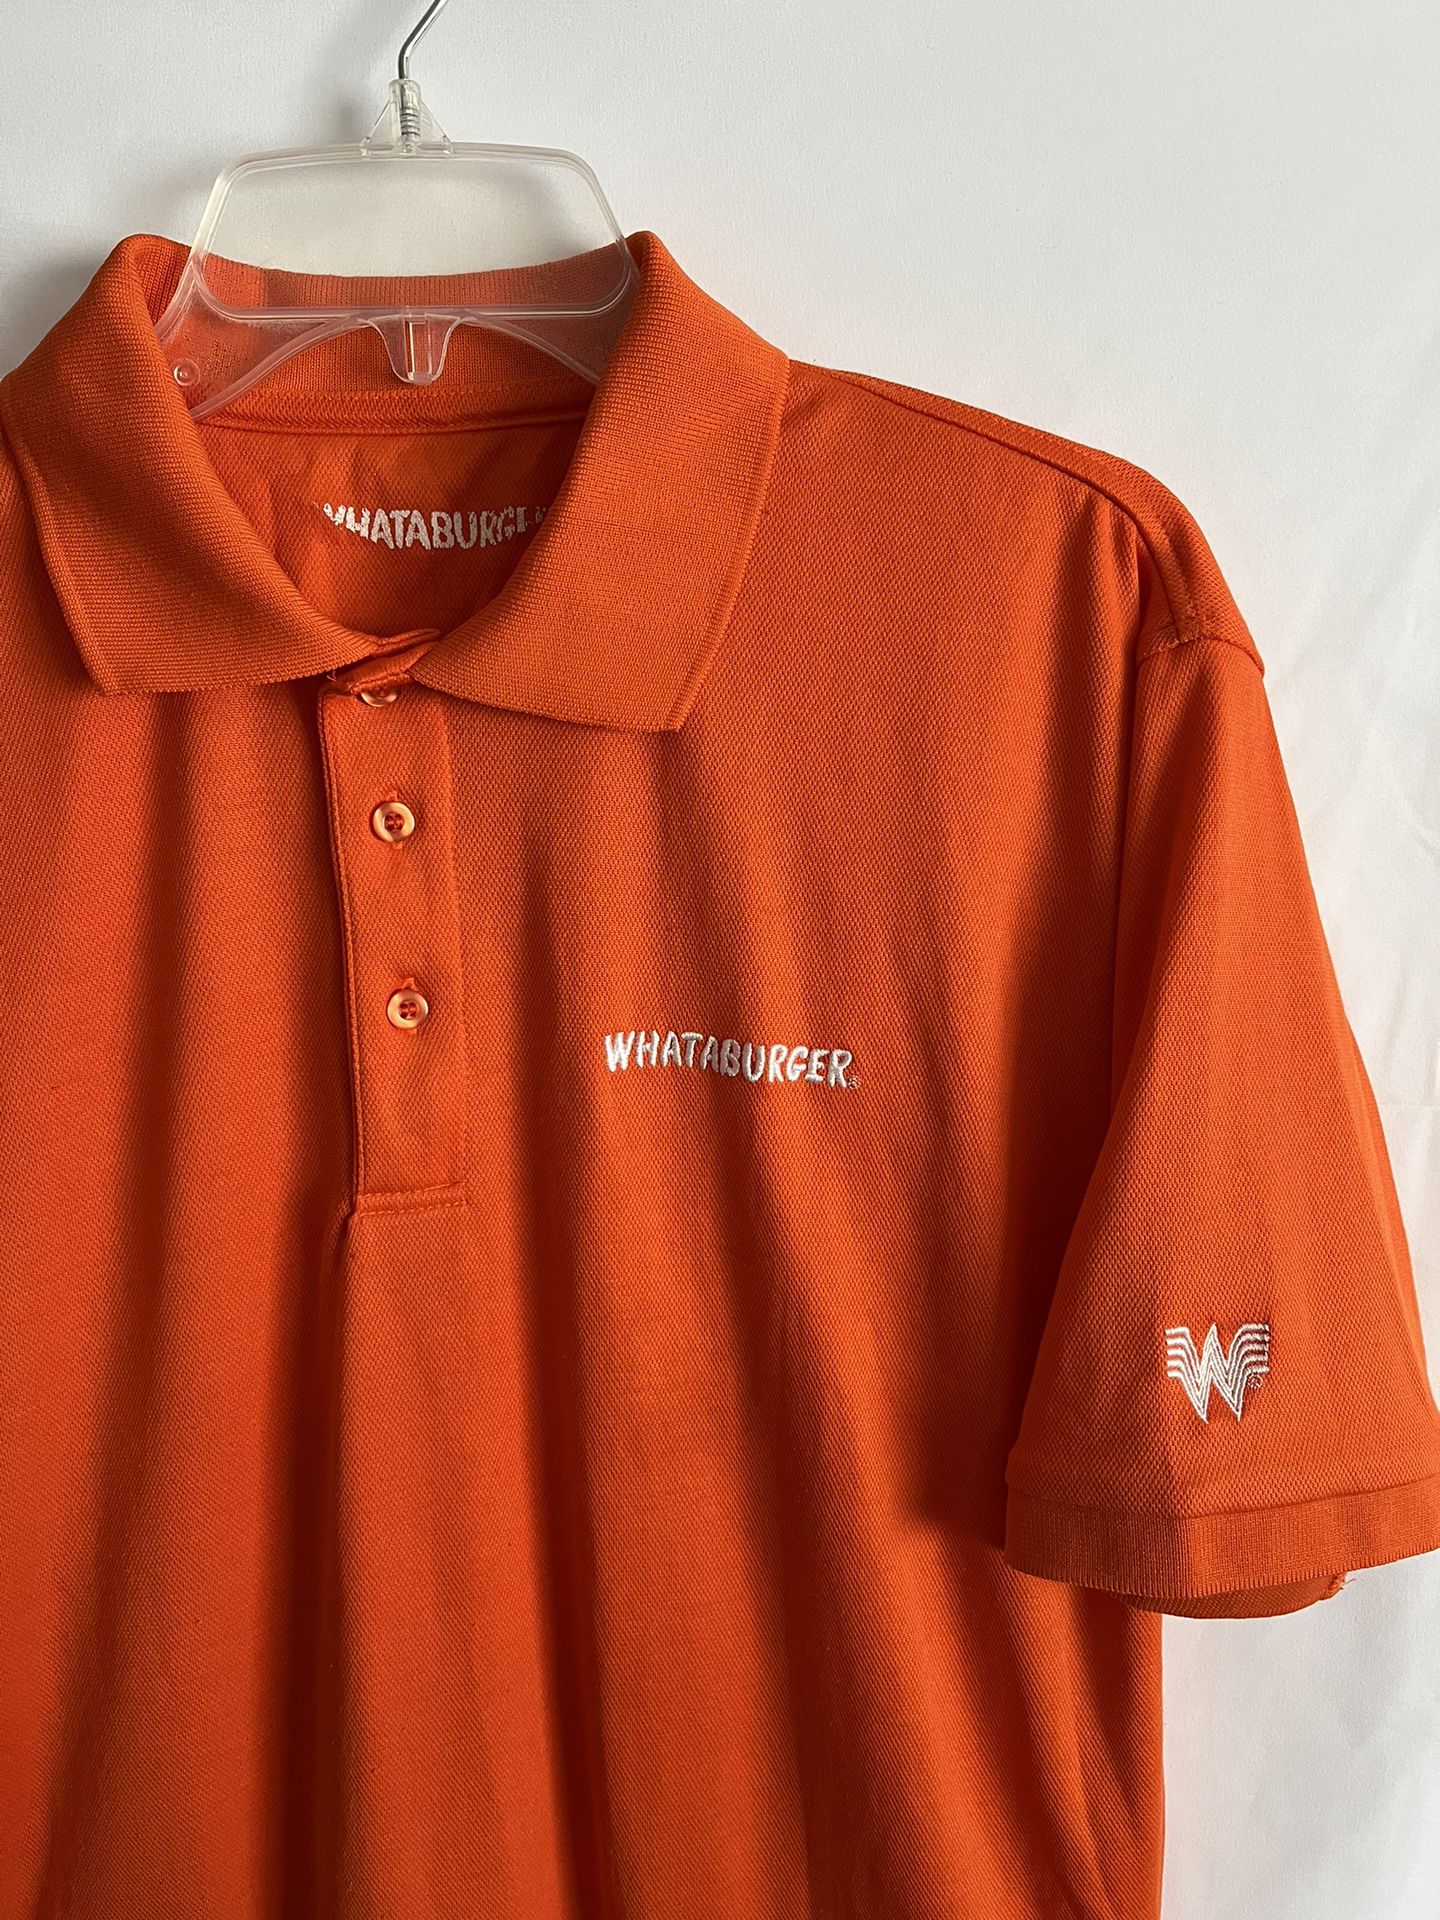 Whataburger Employee Uniform Polo Shirt Men's Medium M Orange Short Sleeves  Work for Sale in San Antonio, TX - OfferUp